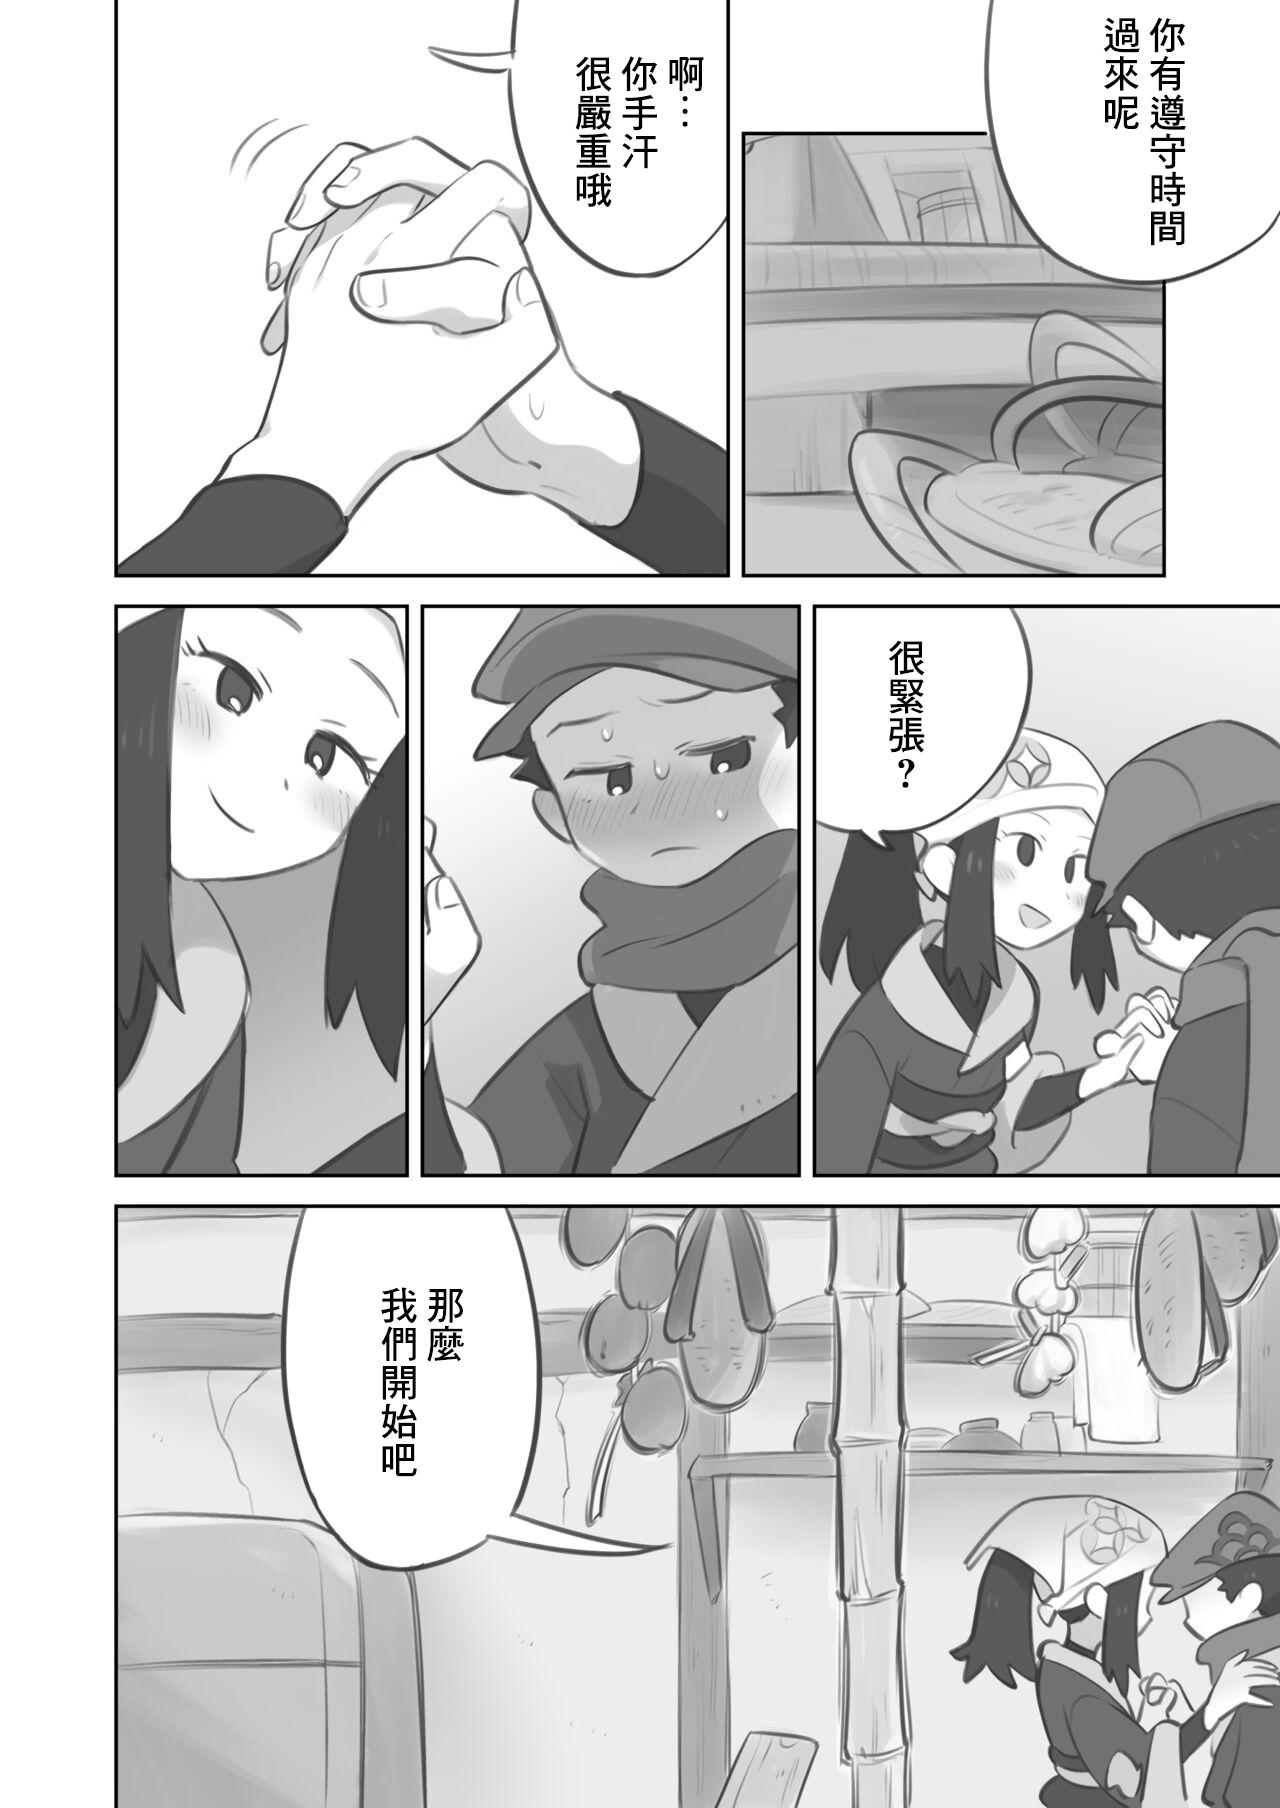 Massages Tekoki Manga - Pokemon | pocket monsters Urine - Page 2